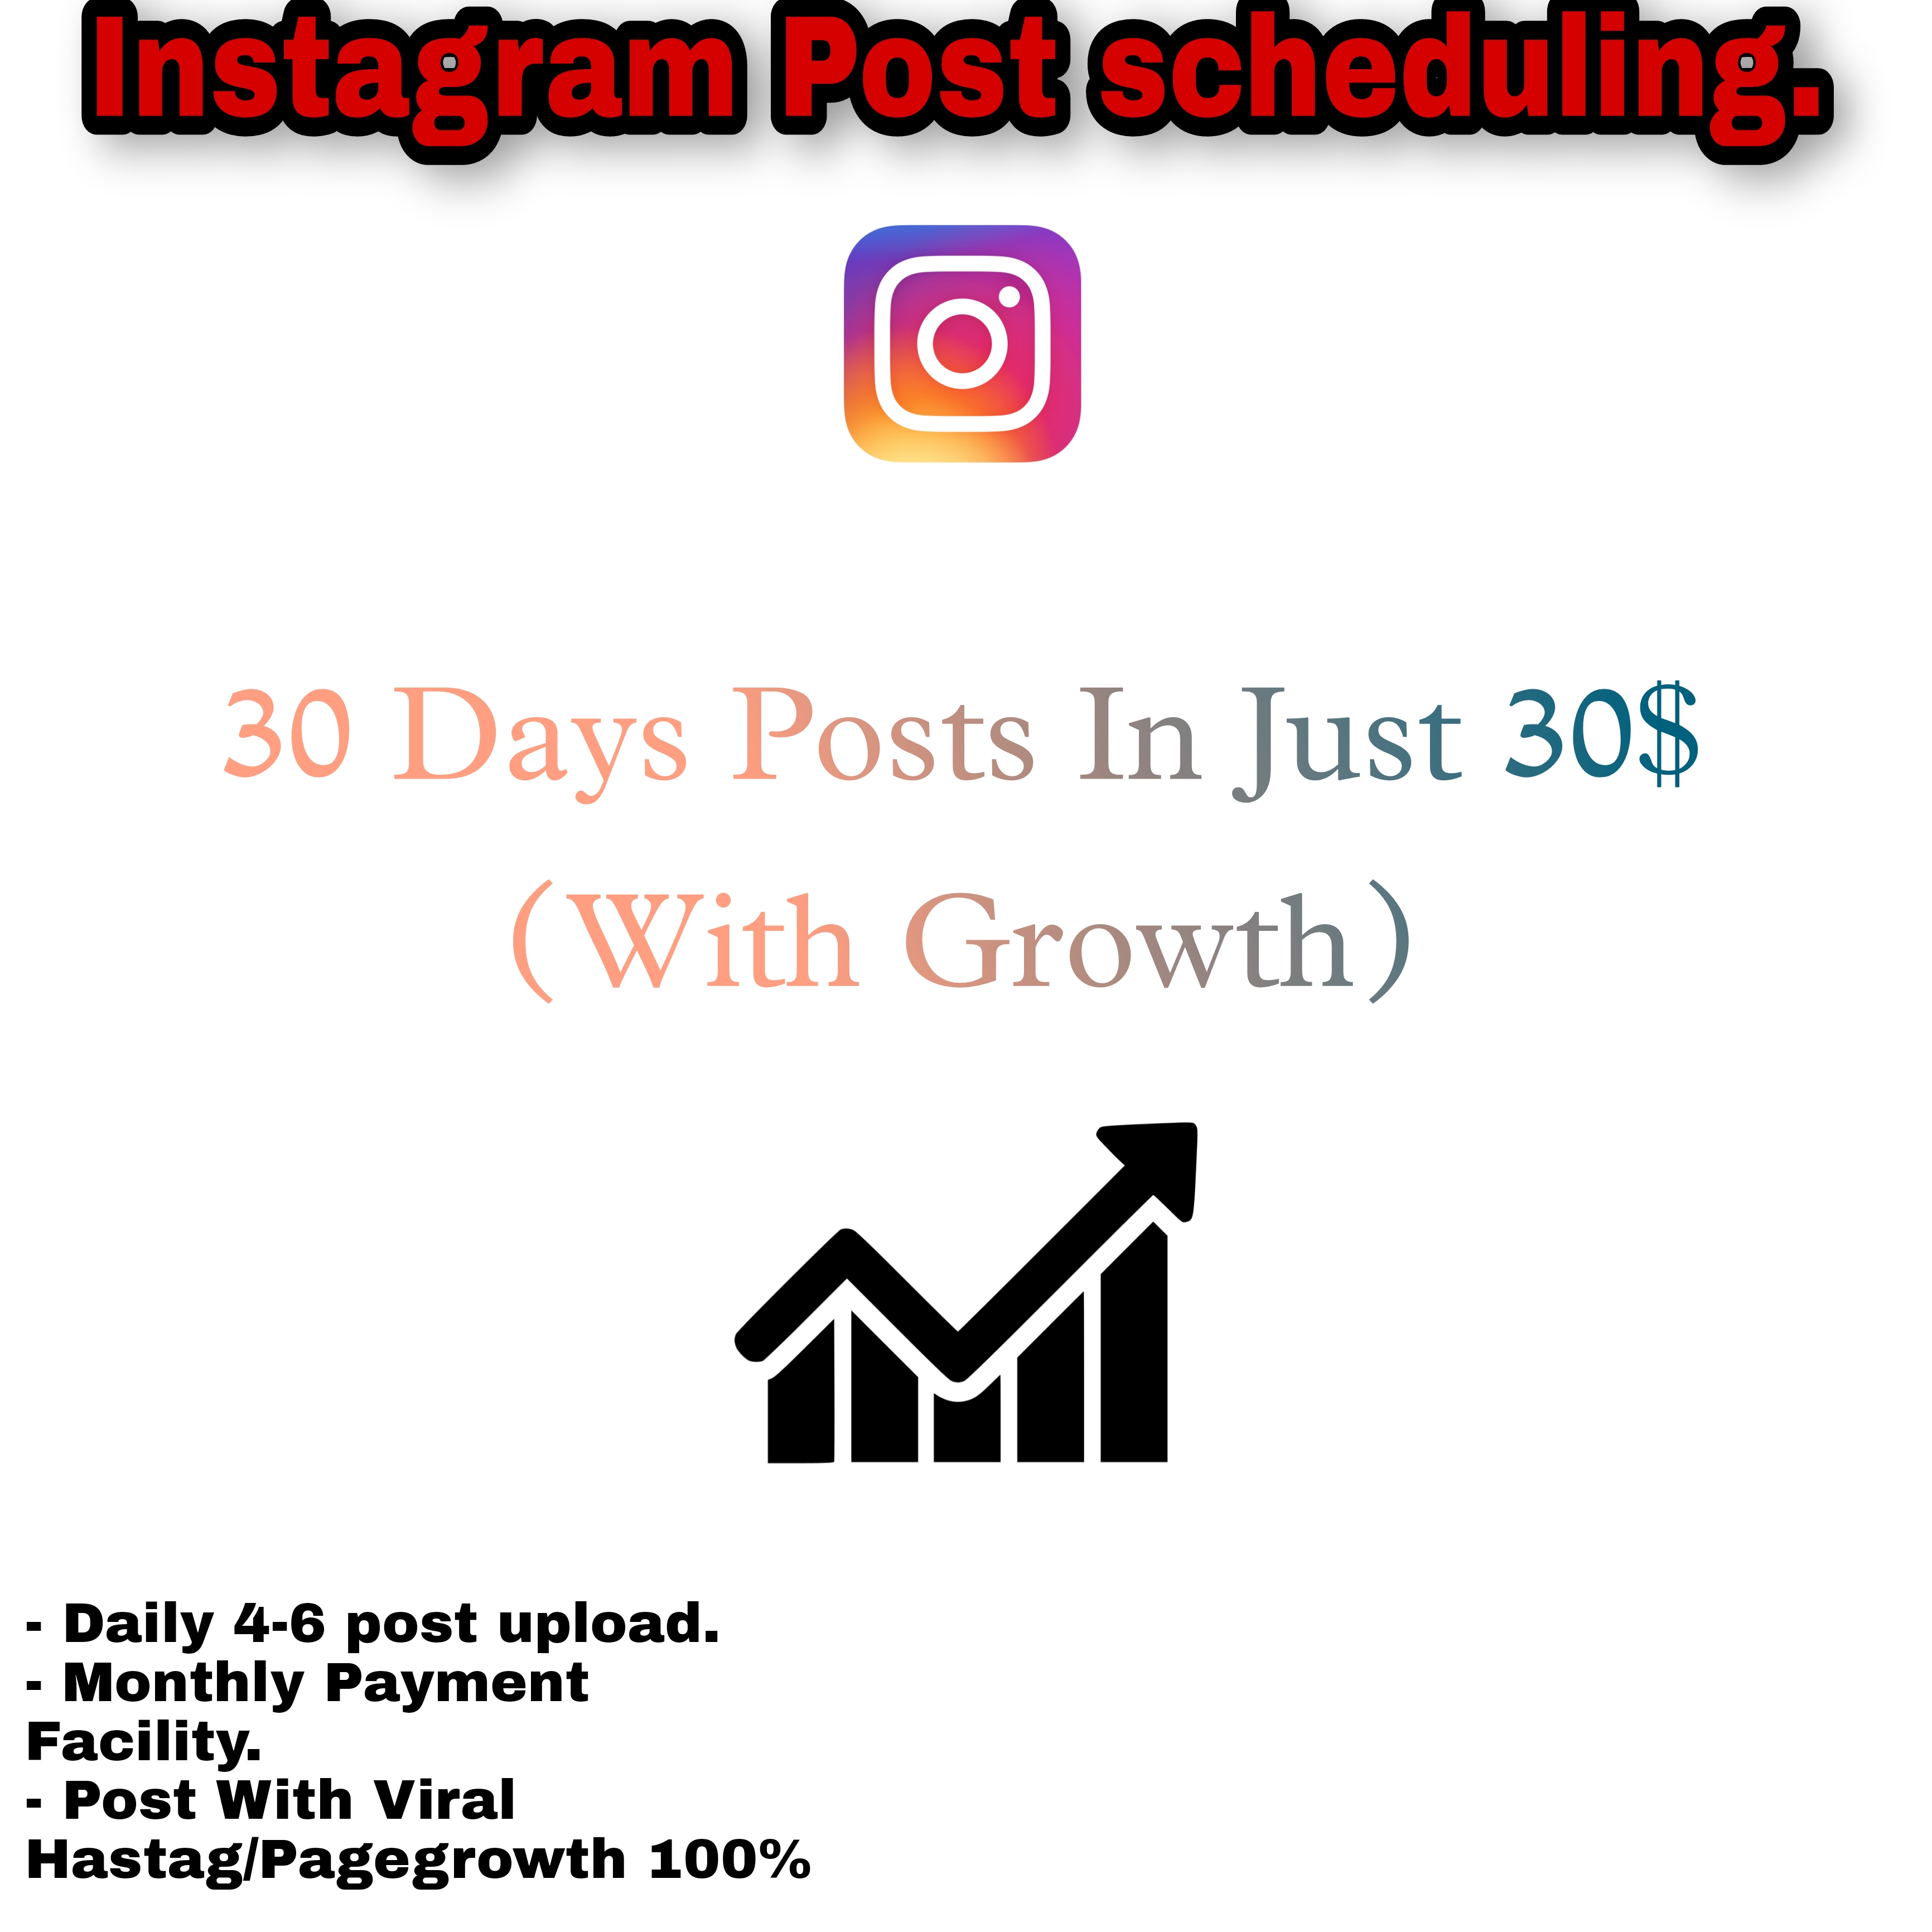 For Instagram Posts Scheduling